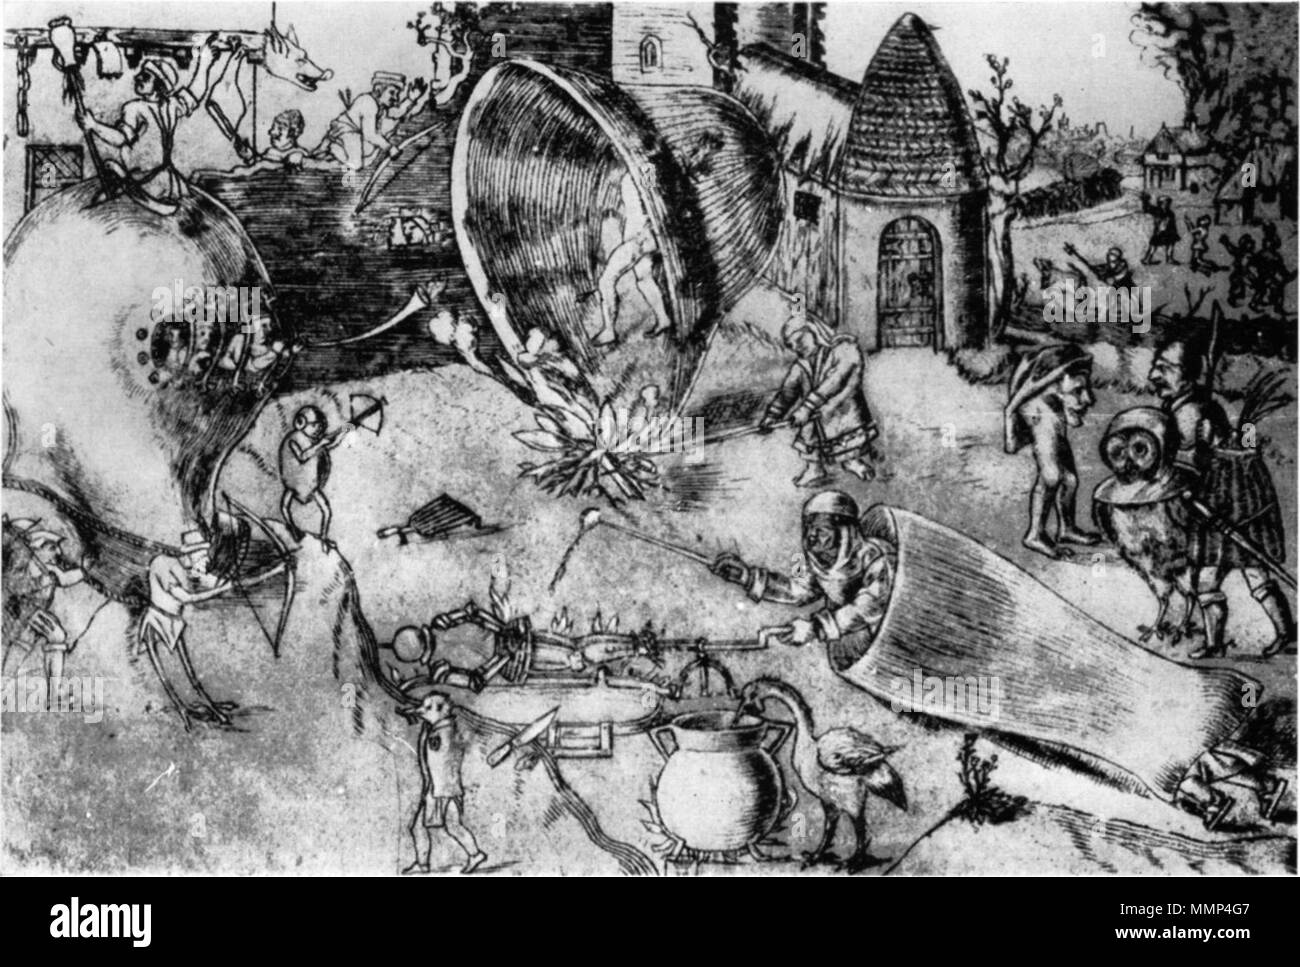 . Grotesken Schlacht Szene.[1] Gravur. Abmessungen und Lage unbekannt. Alternative Titel (s): krijgslieden Hekeling van de armoezaaiers.[2] krijgslieden Hekeling van de pretmakende armoezaaiers en Van hun onderlinge vijandschap.[3]. 1465-1516 (?). Nach Hieronymus Bosch oder Anhänger von Hieronymus Bosch nach Hieronymus Bosch 009 Stockfoto